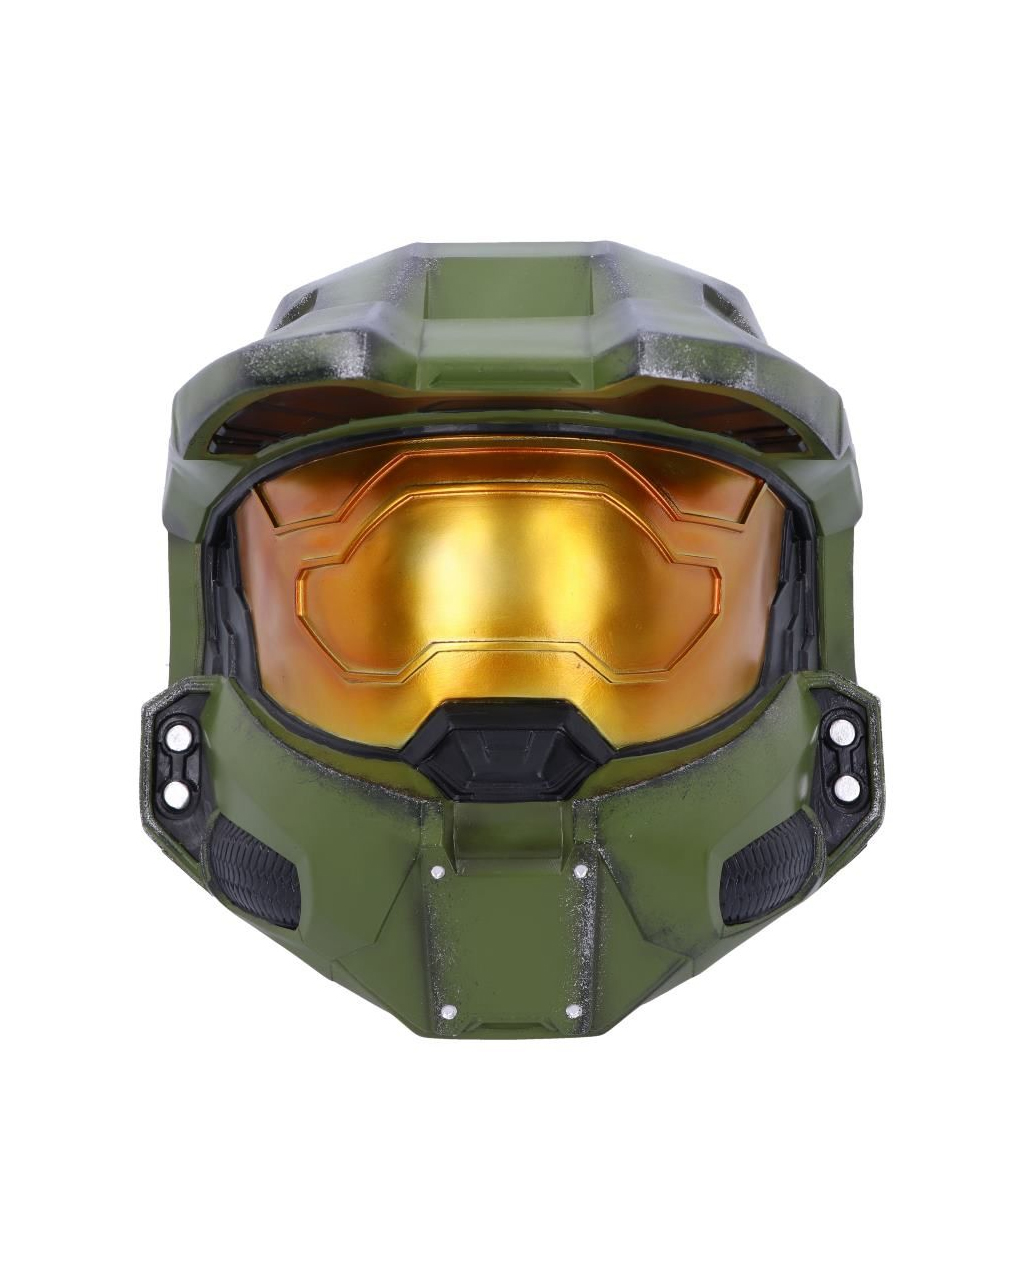 Halo Master Chief Helmet Box 25cm as a fan article | Horror-Shop.com